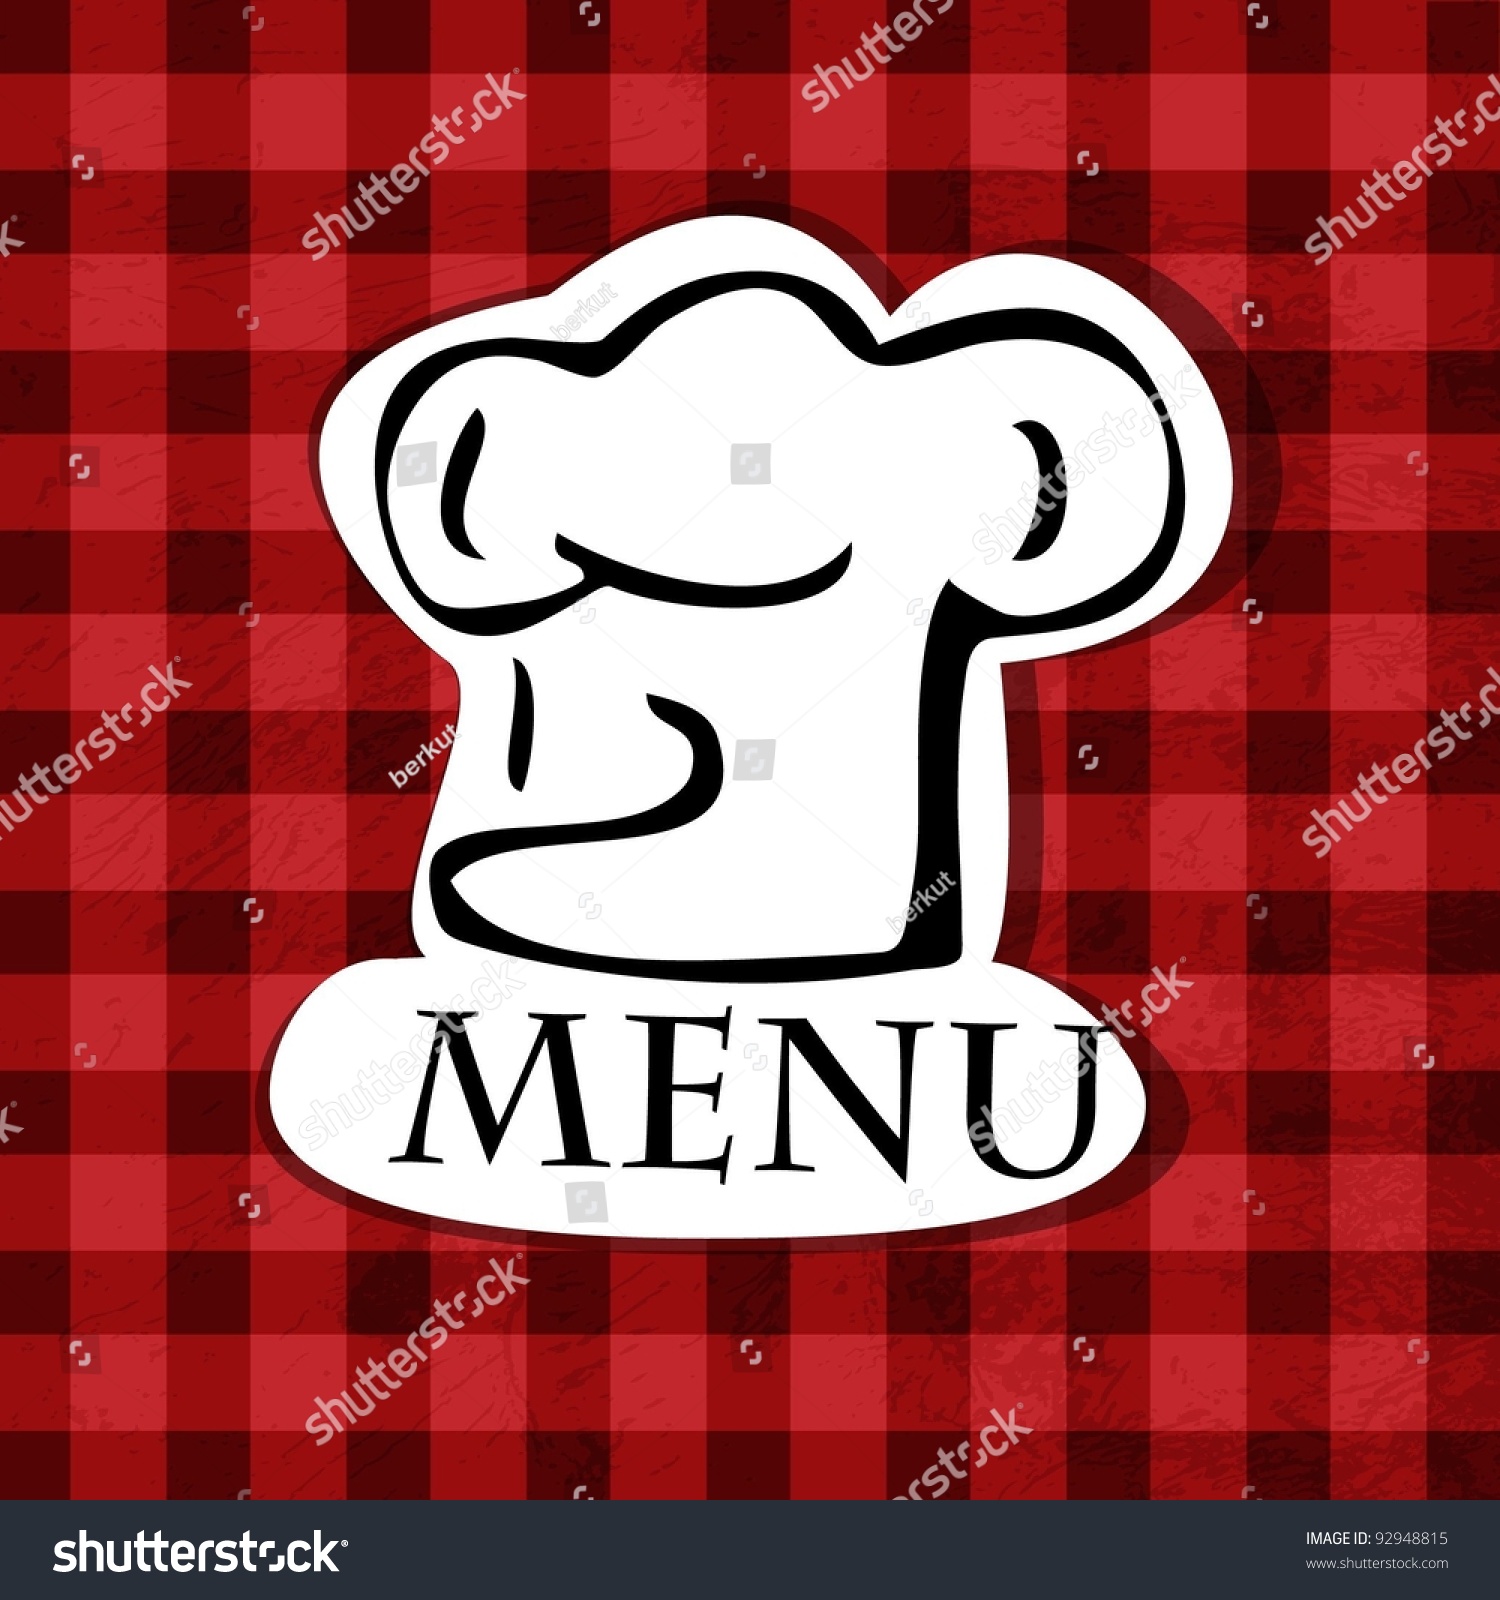 Restaurant Menu Design Stock Vector Royalty Free 92948815 Shutterstock